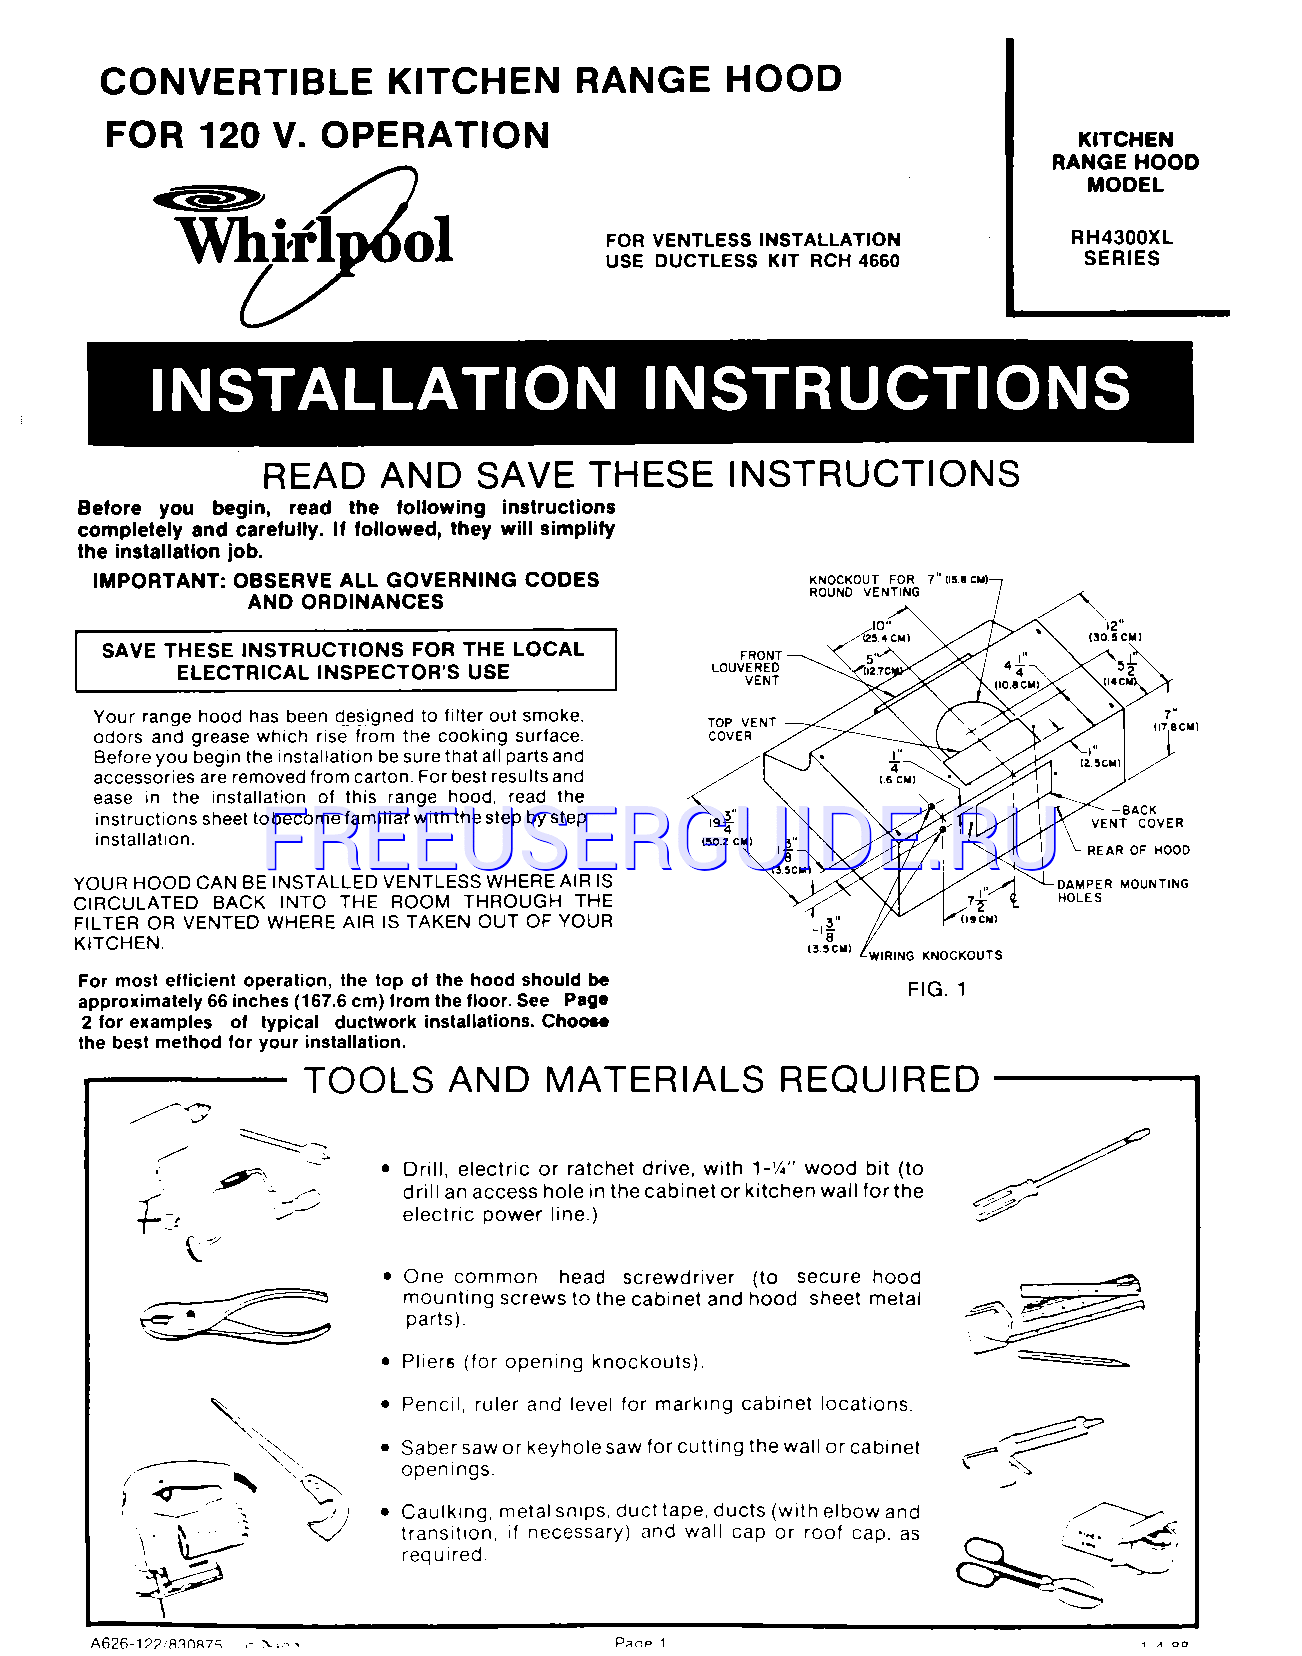 Leer online Manual de usuario para Whirlpool RH4300XL (Page 1)